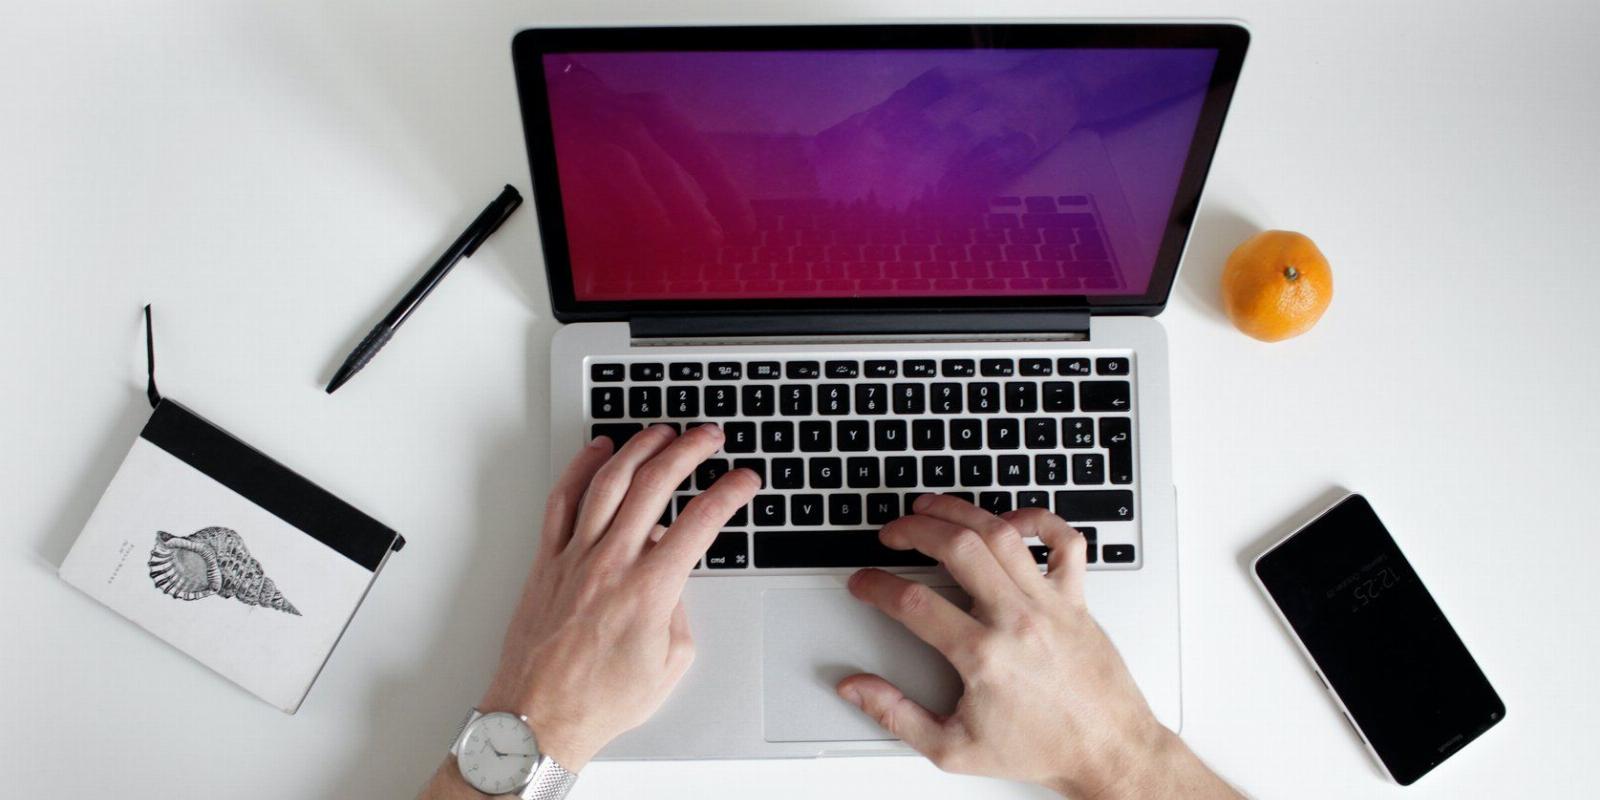 8 Ways to Fix the Windows Desktop When It Turns Pink or Purple